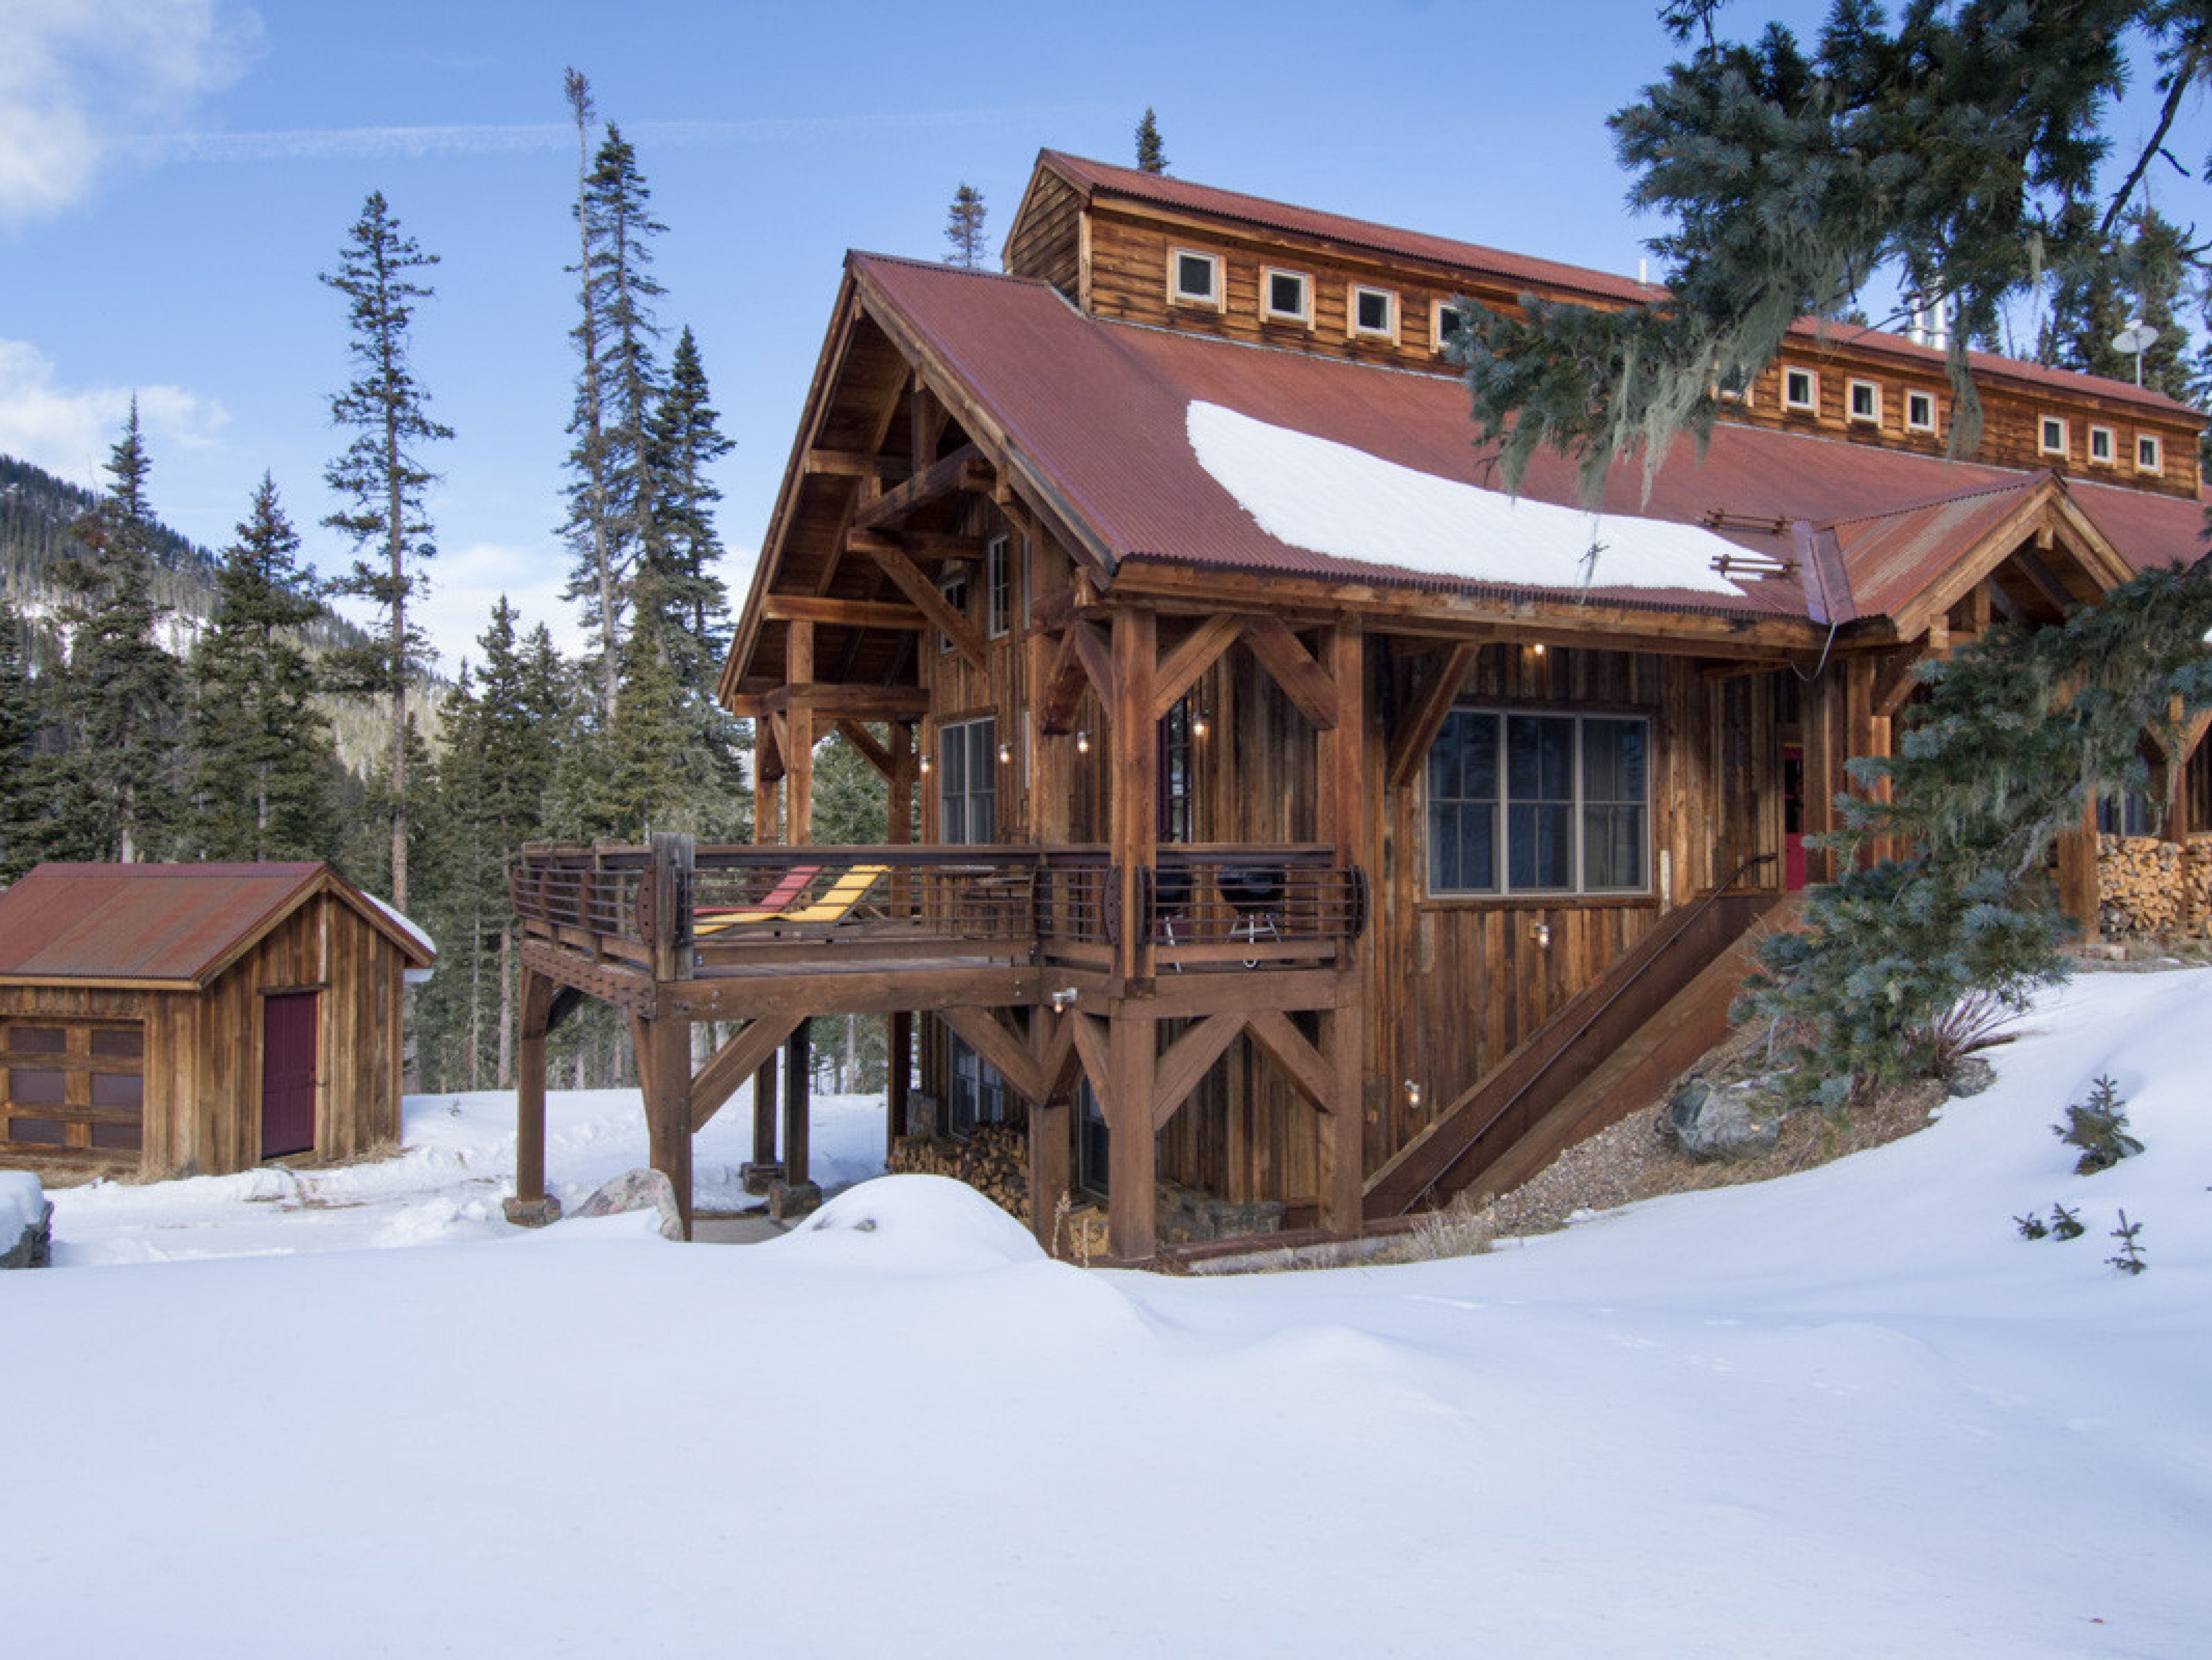 Taos Ski Valley 7 vacation cabin rentals